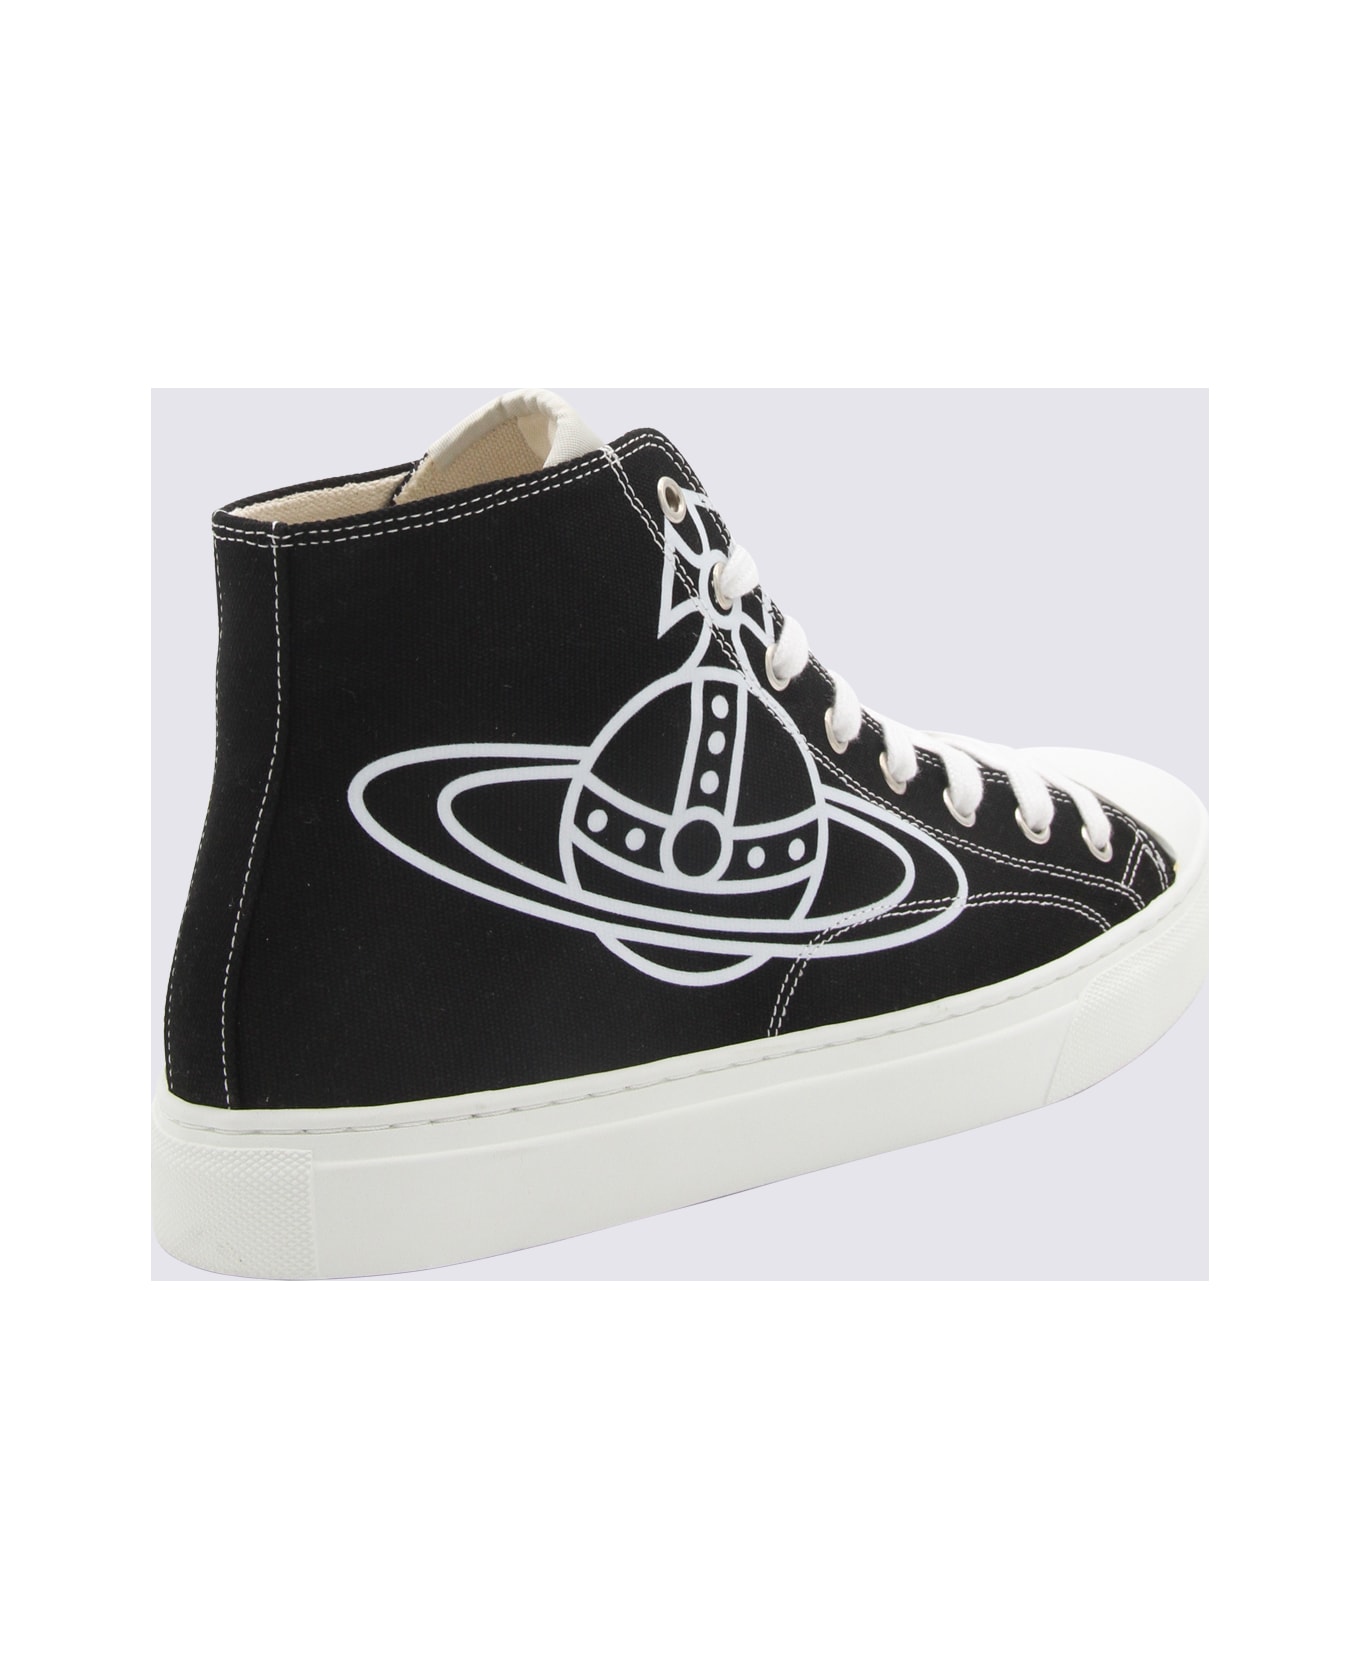 Vivienne Westwood Black And White Canvas Plimsoll Sneakers - Black